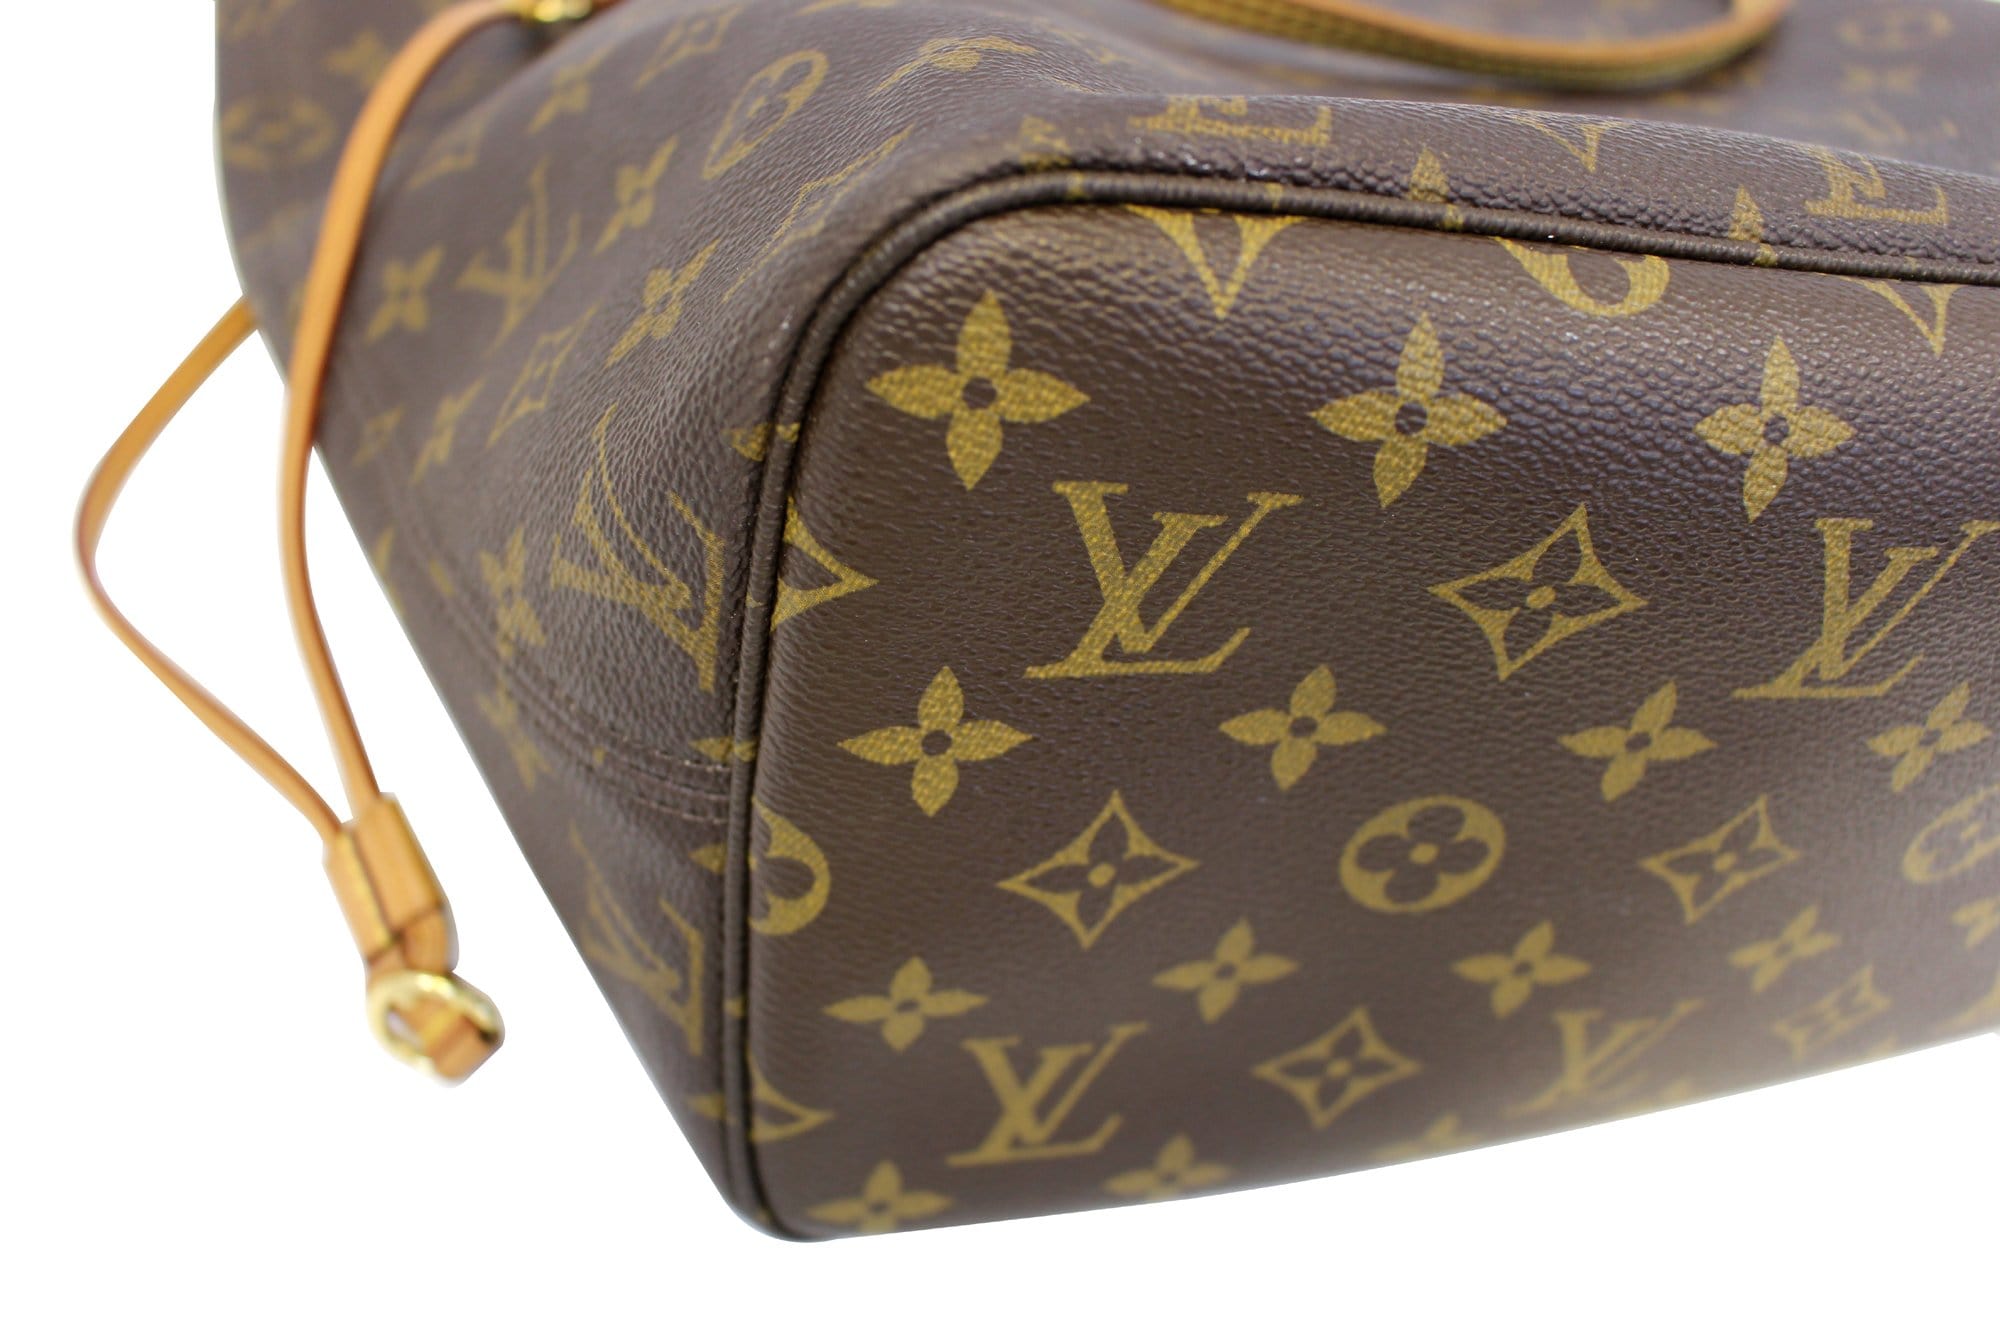 🌸 Louis Vuitton Artsy MM Monogram Shoulder Bag Tote Purse (GI4181) +  Receipt 🌸